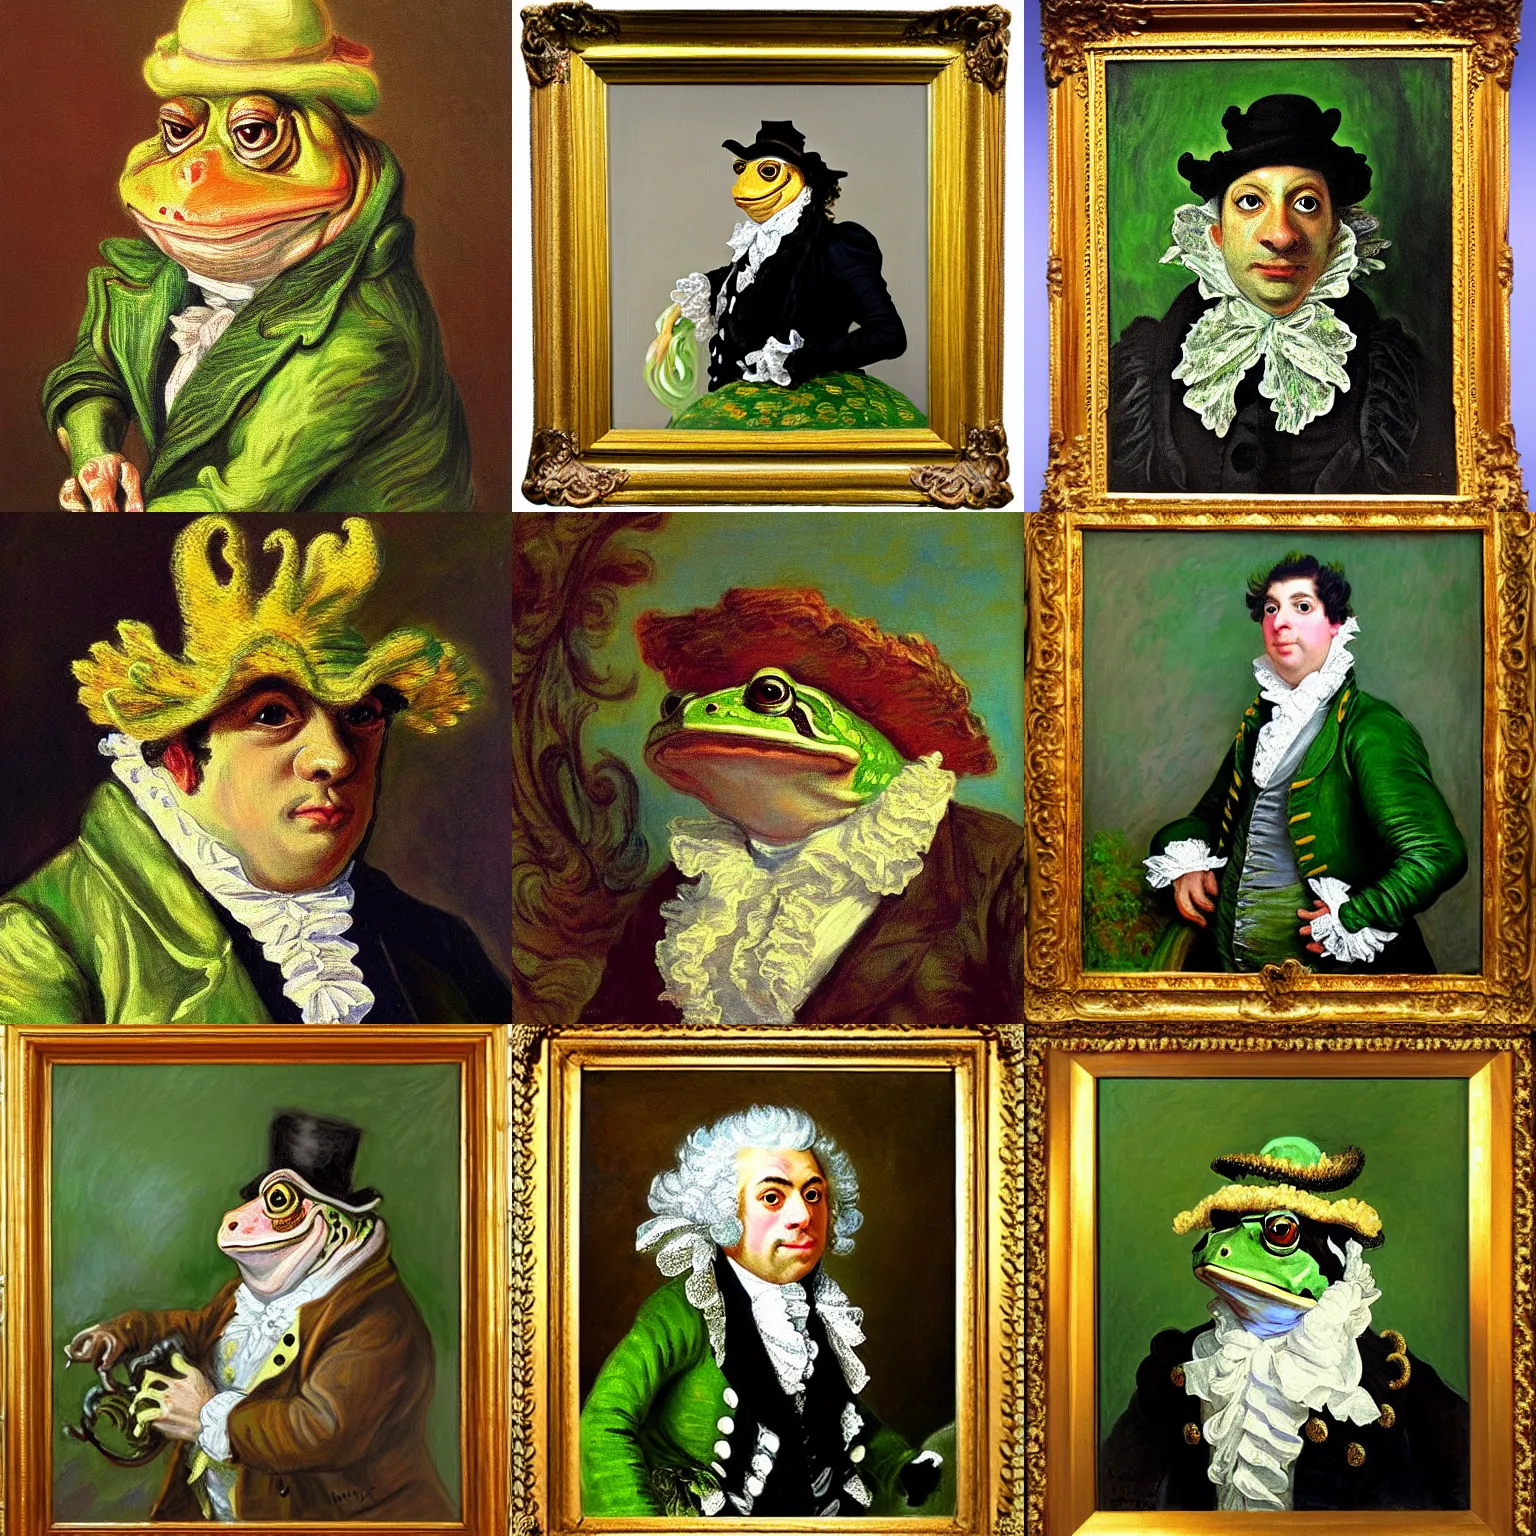 Prompt: portrait rococo painting of frog gentleman by monet